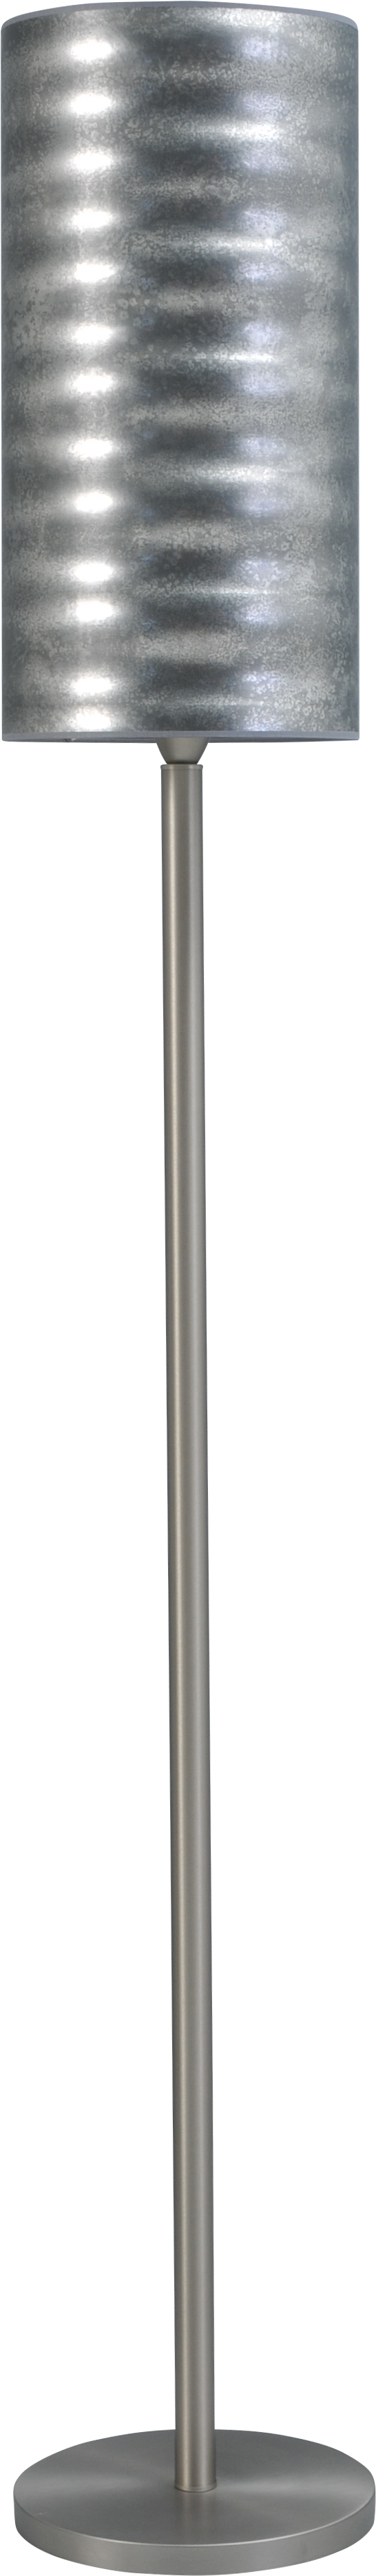 Dopler VL DOPLER NIKKEL H.175CM BUIS M30 125CM